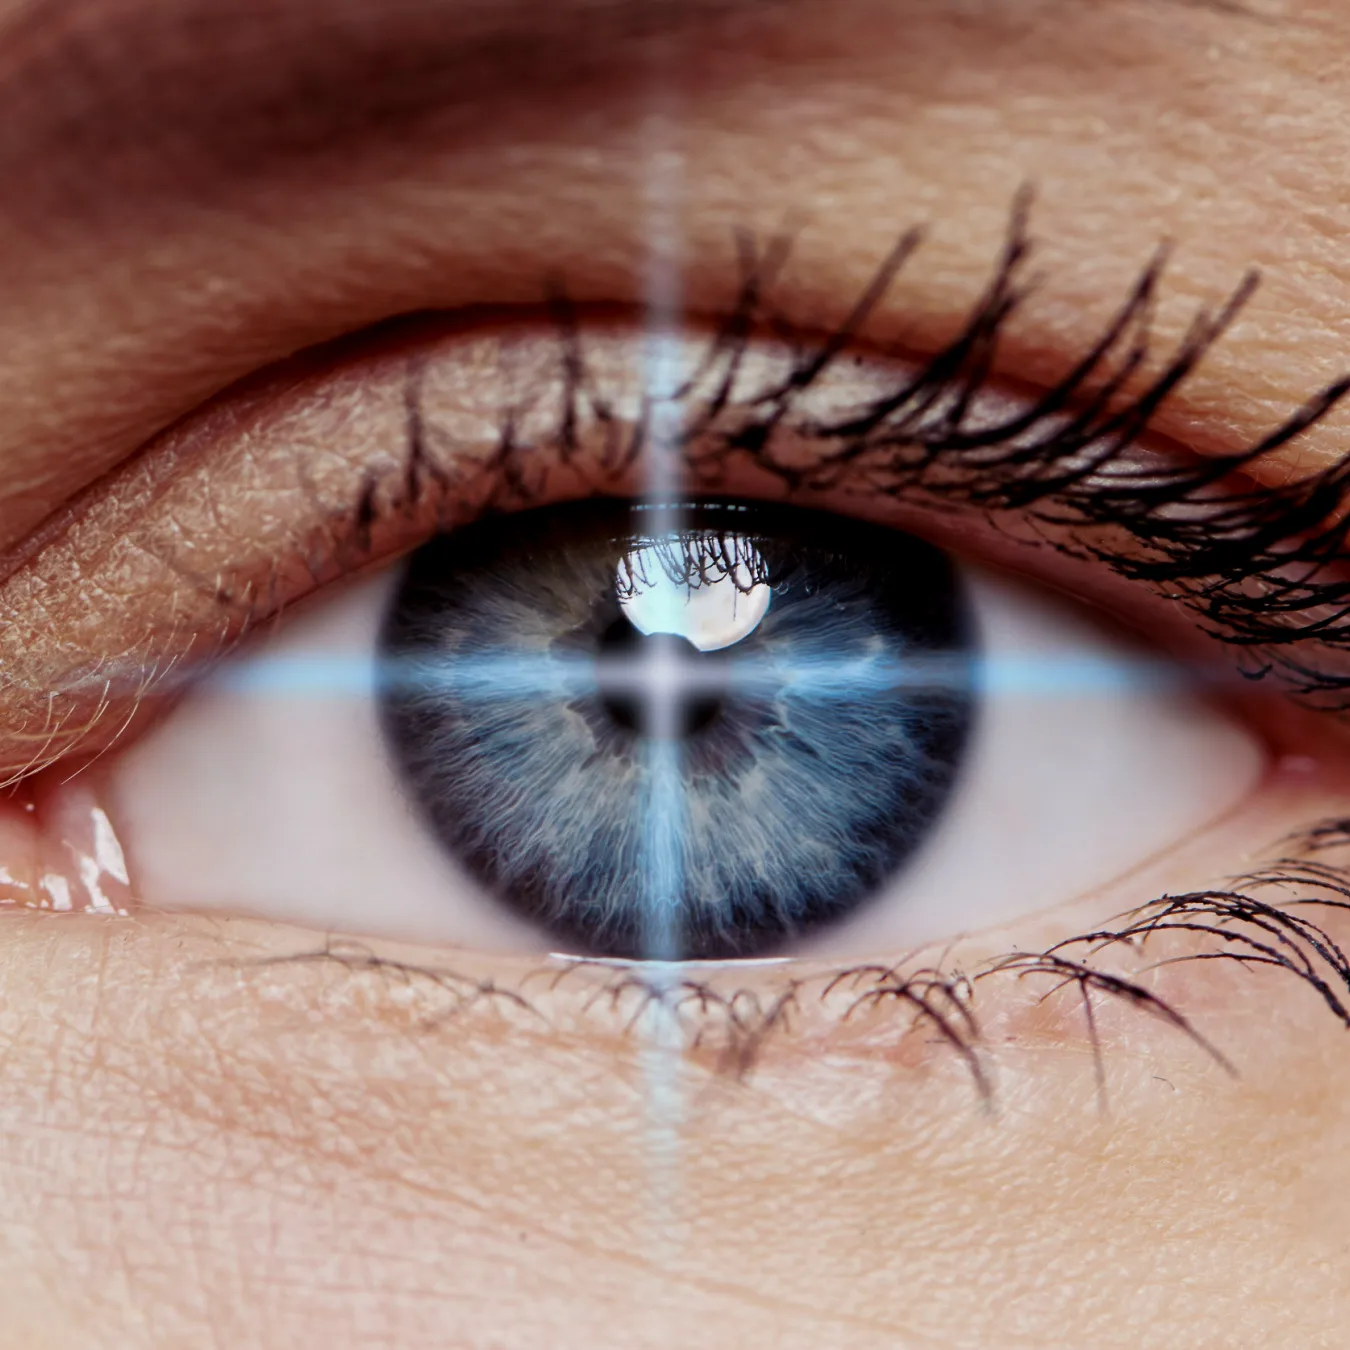 laser eye surgery on an eye close up